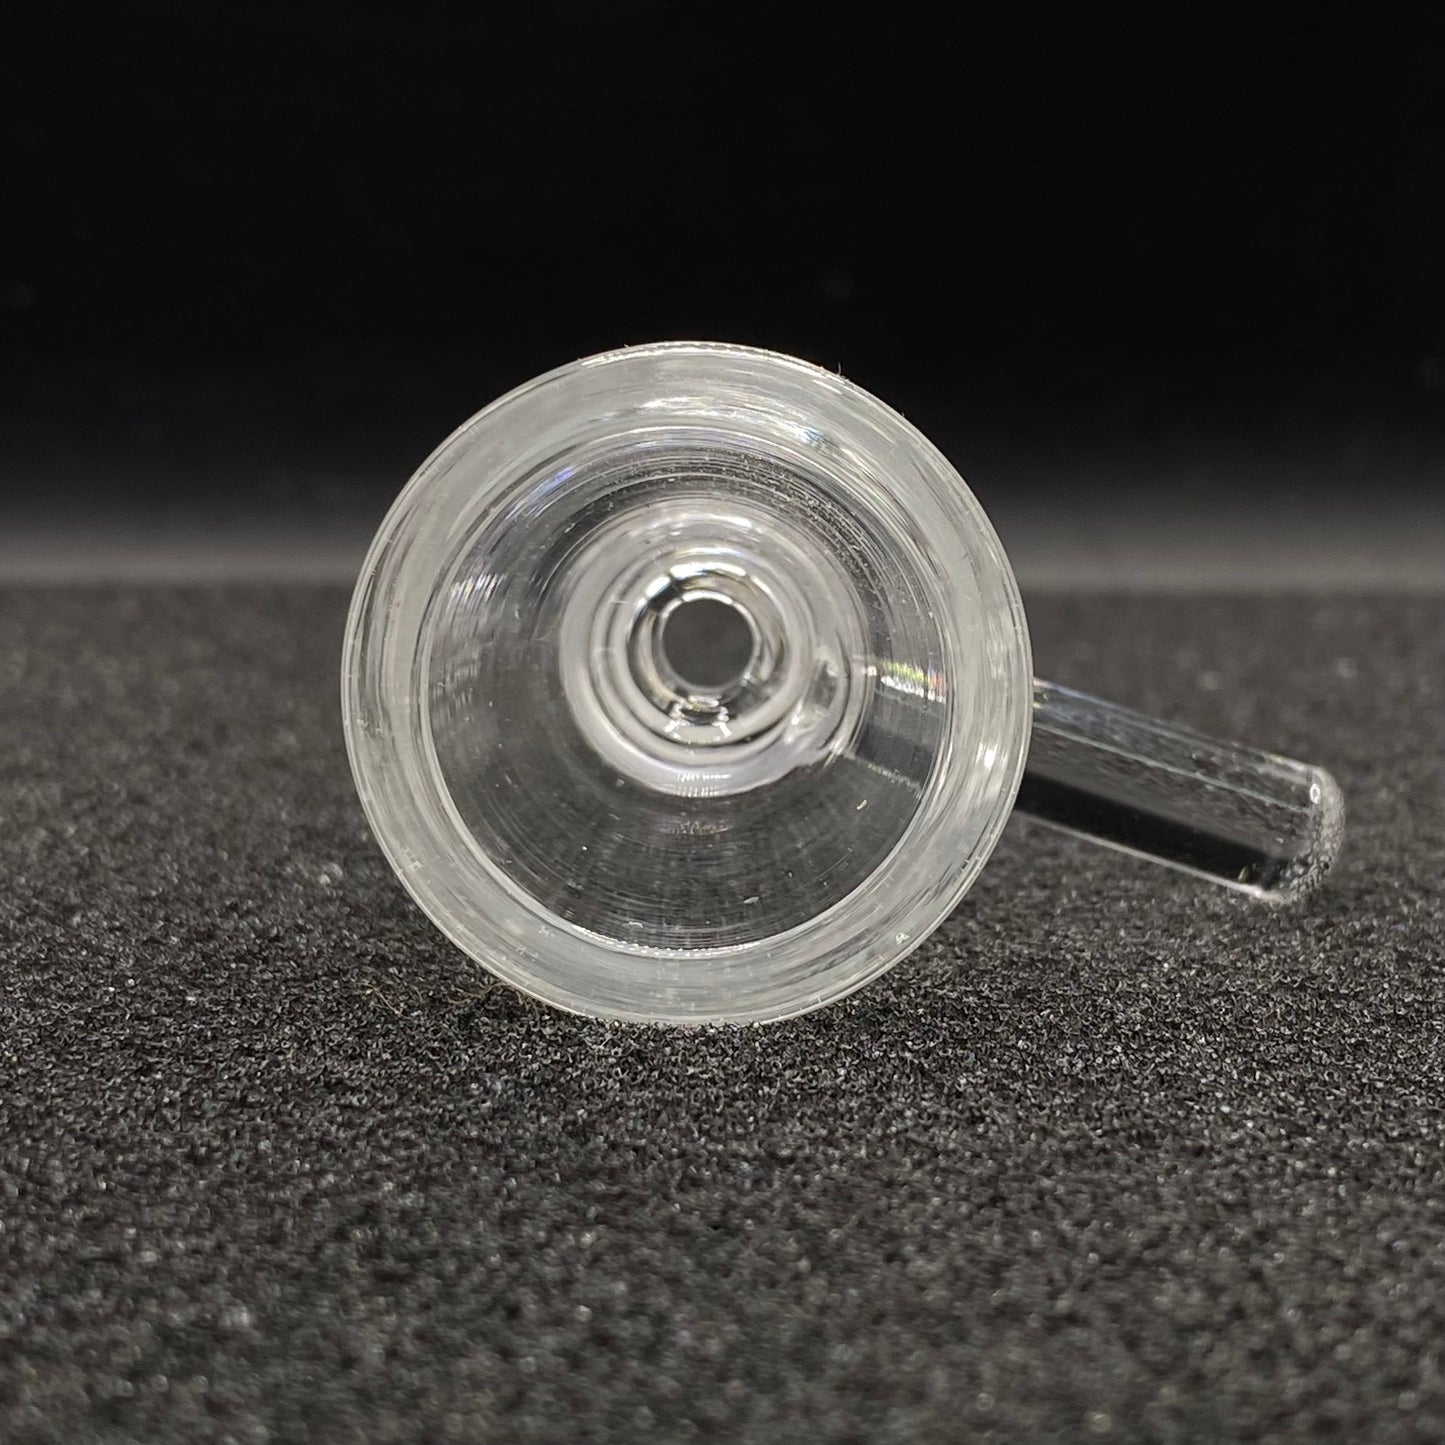 420 Glass - 18mm Clear Glass Bowl Slide